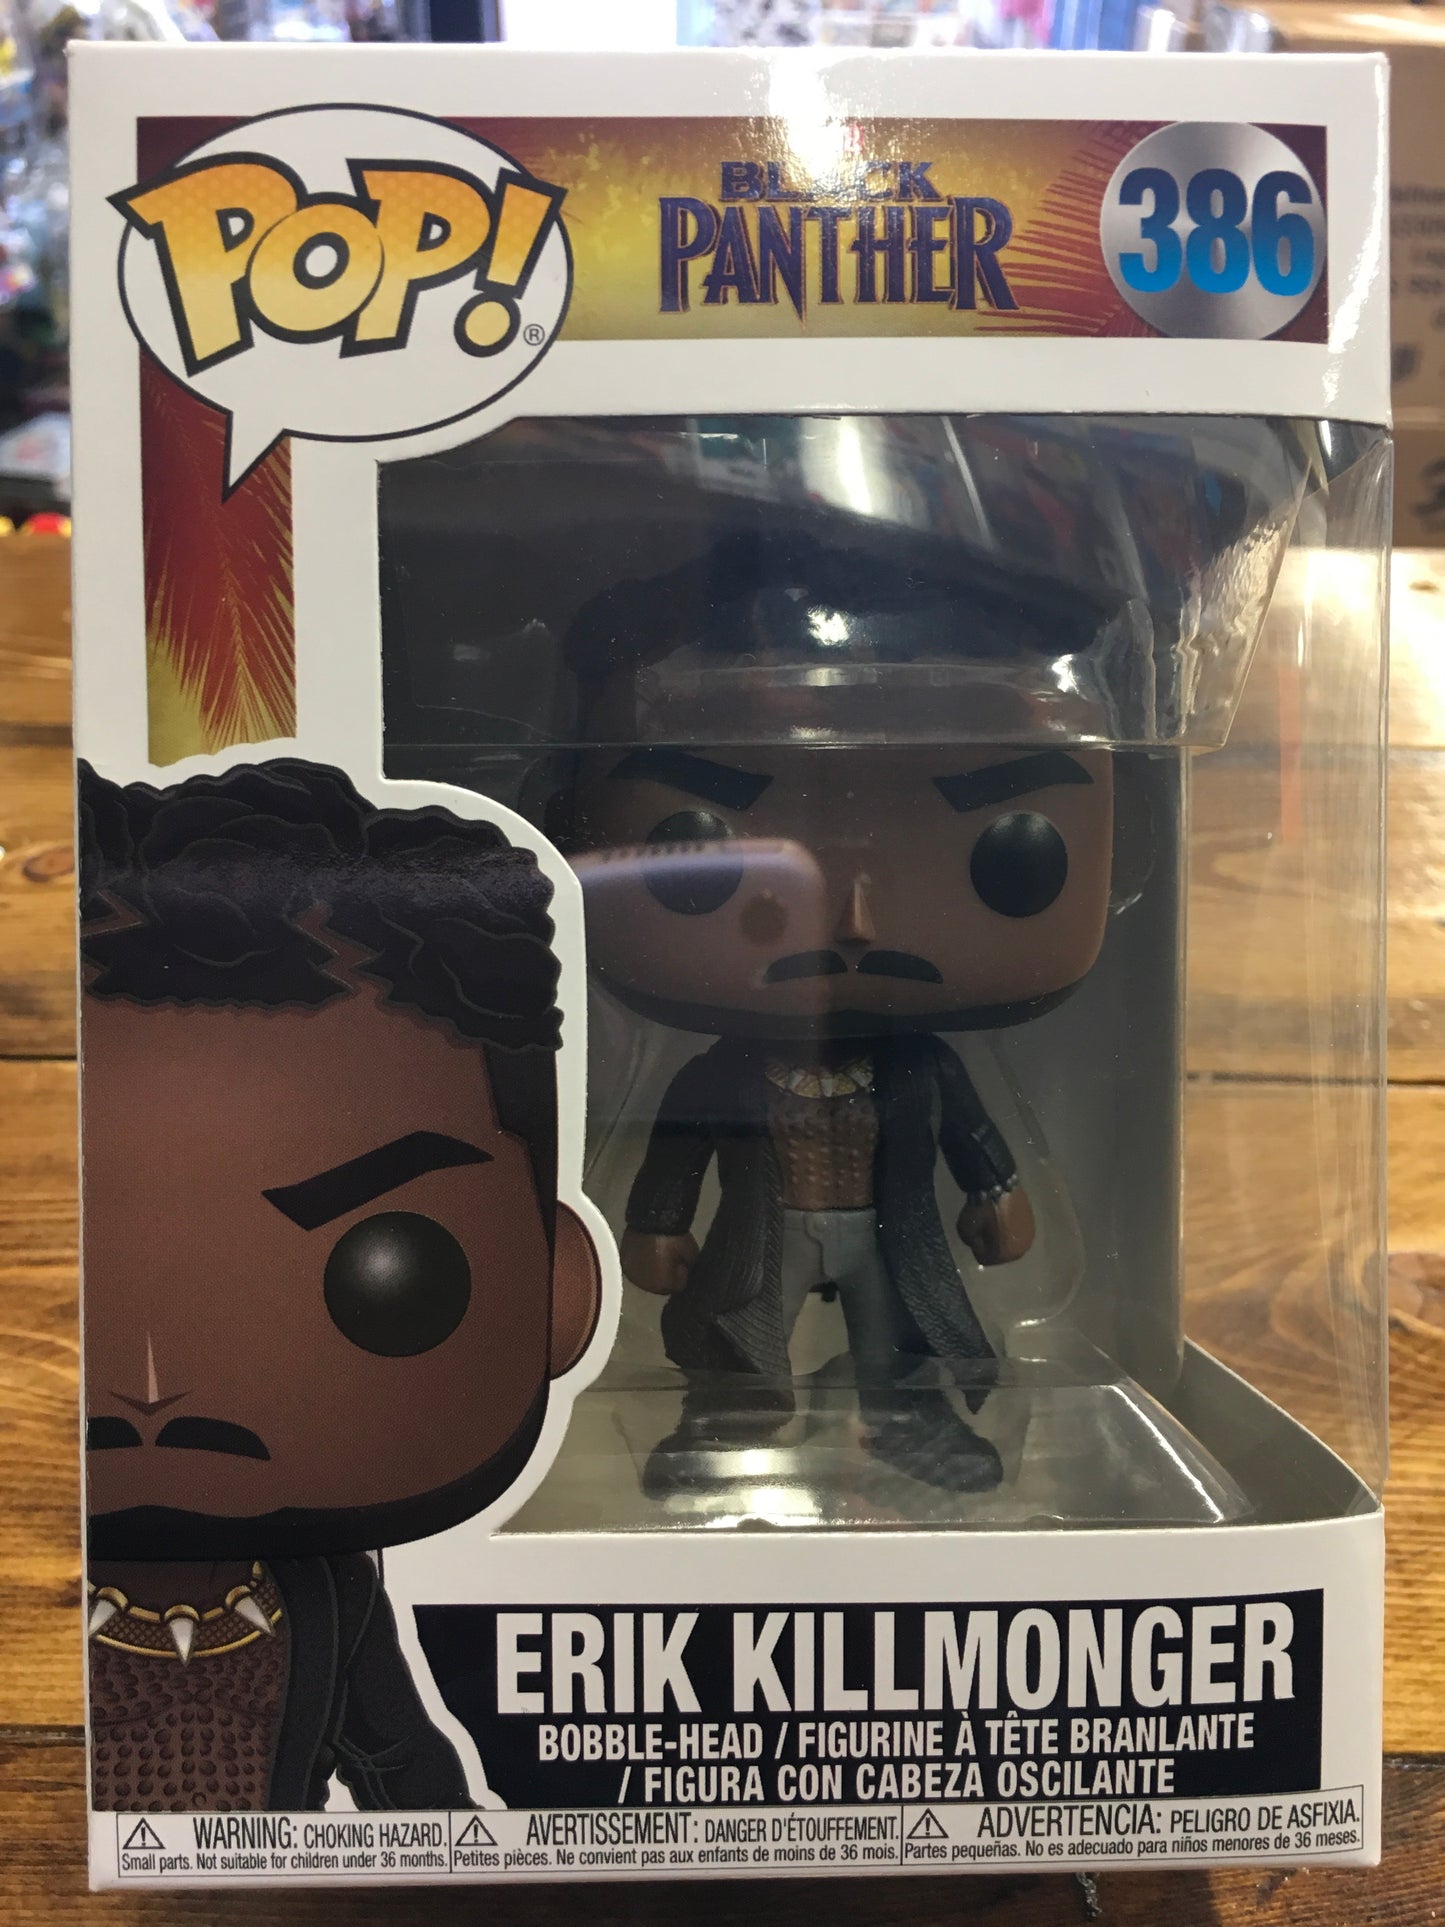 Marvel Black Panther - Erik Killmonger #386 - Funko Pop! Vinyl Figure